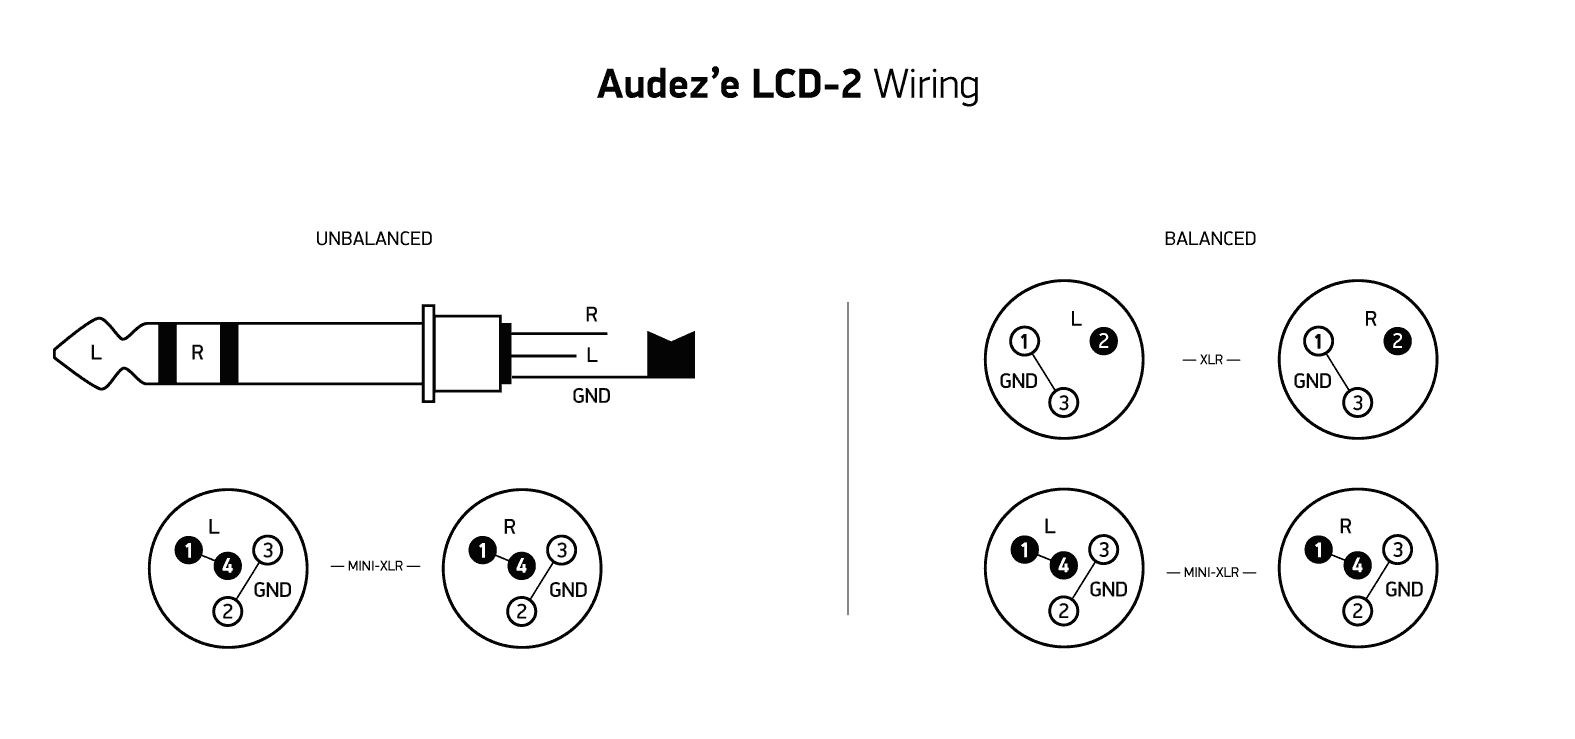 Audeze-lcd2-wiring-scheme.png